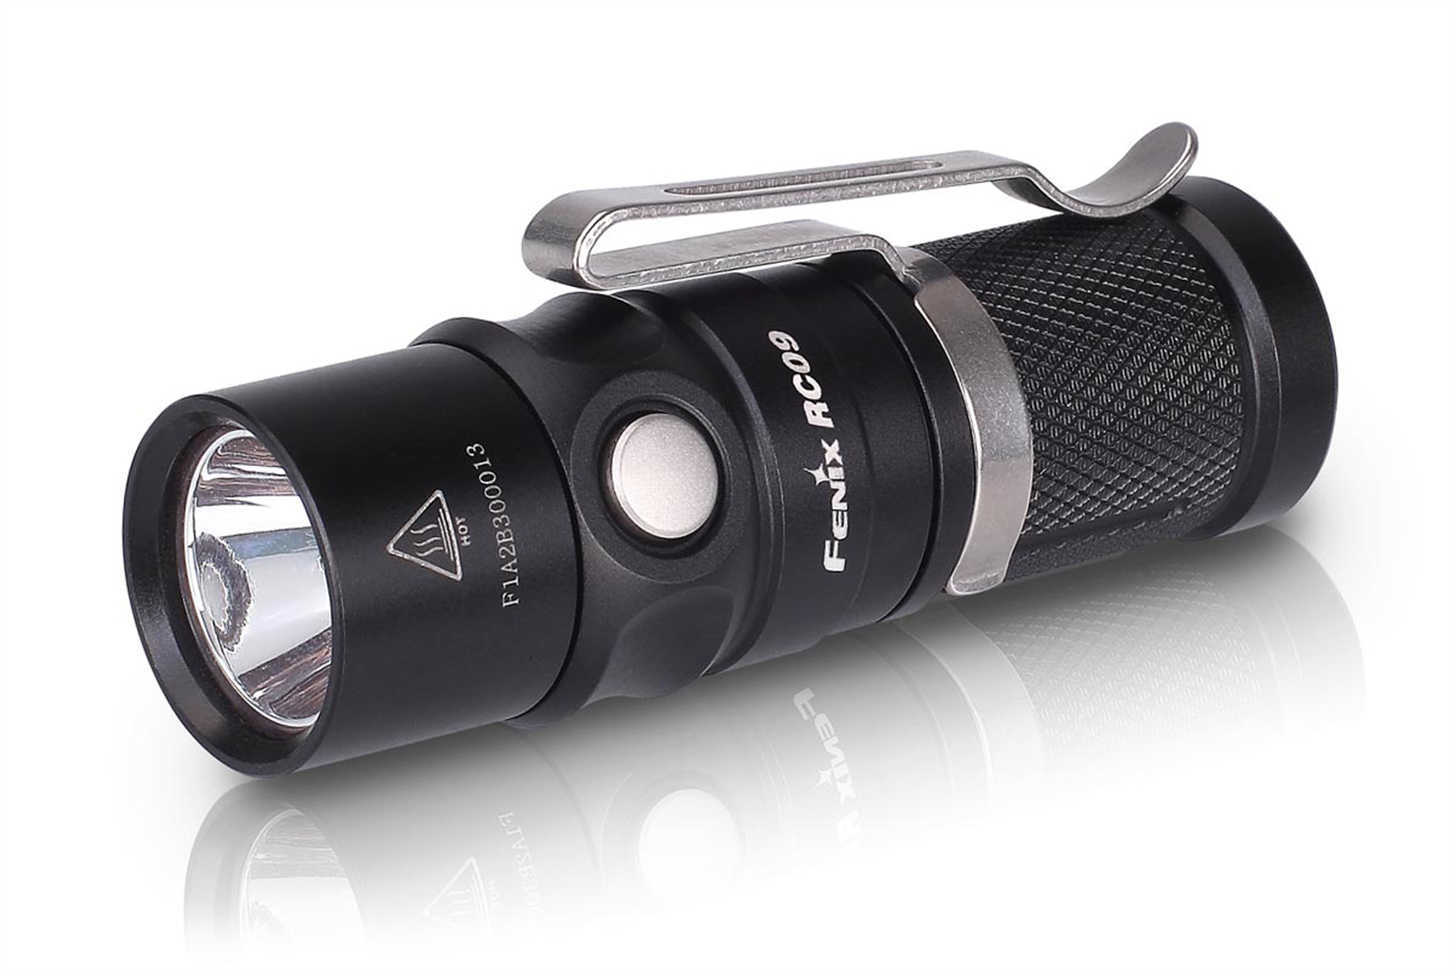 Fenix Flashlights Rc09 550 Lumens Magnetic Charging Black Md: FX-Rc09